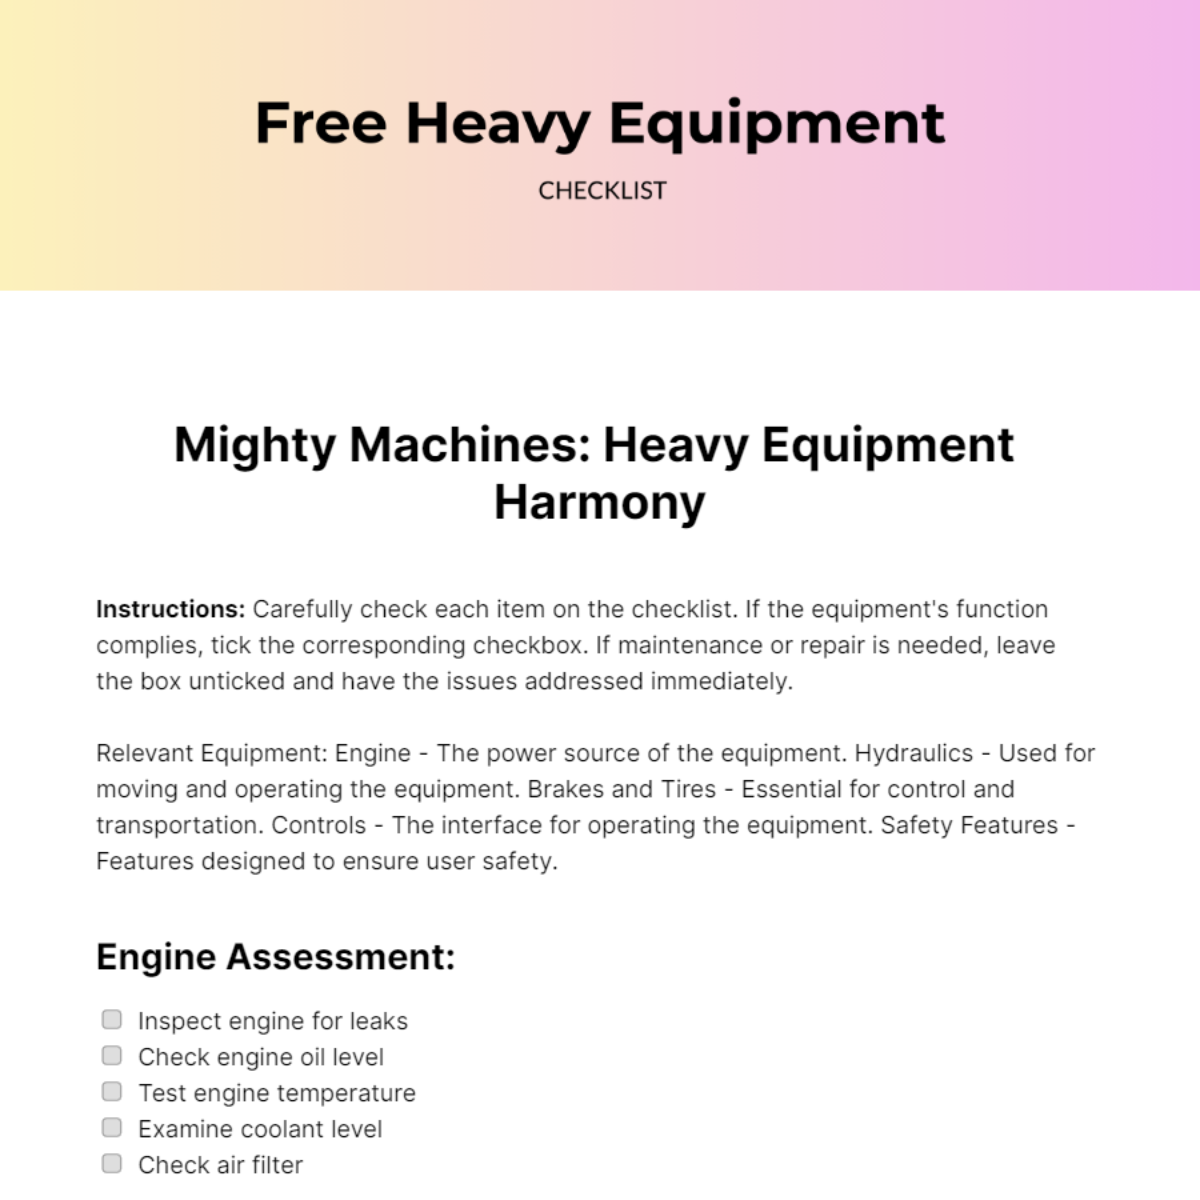 Free Heavy Equipment Checklist Template